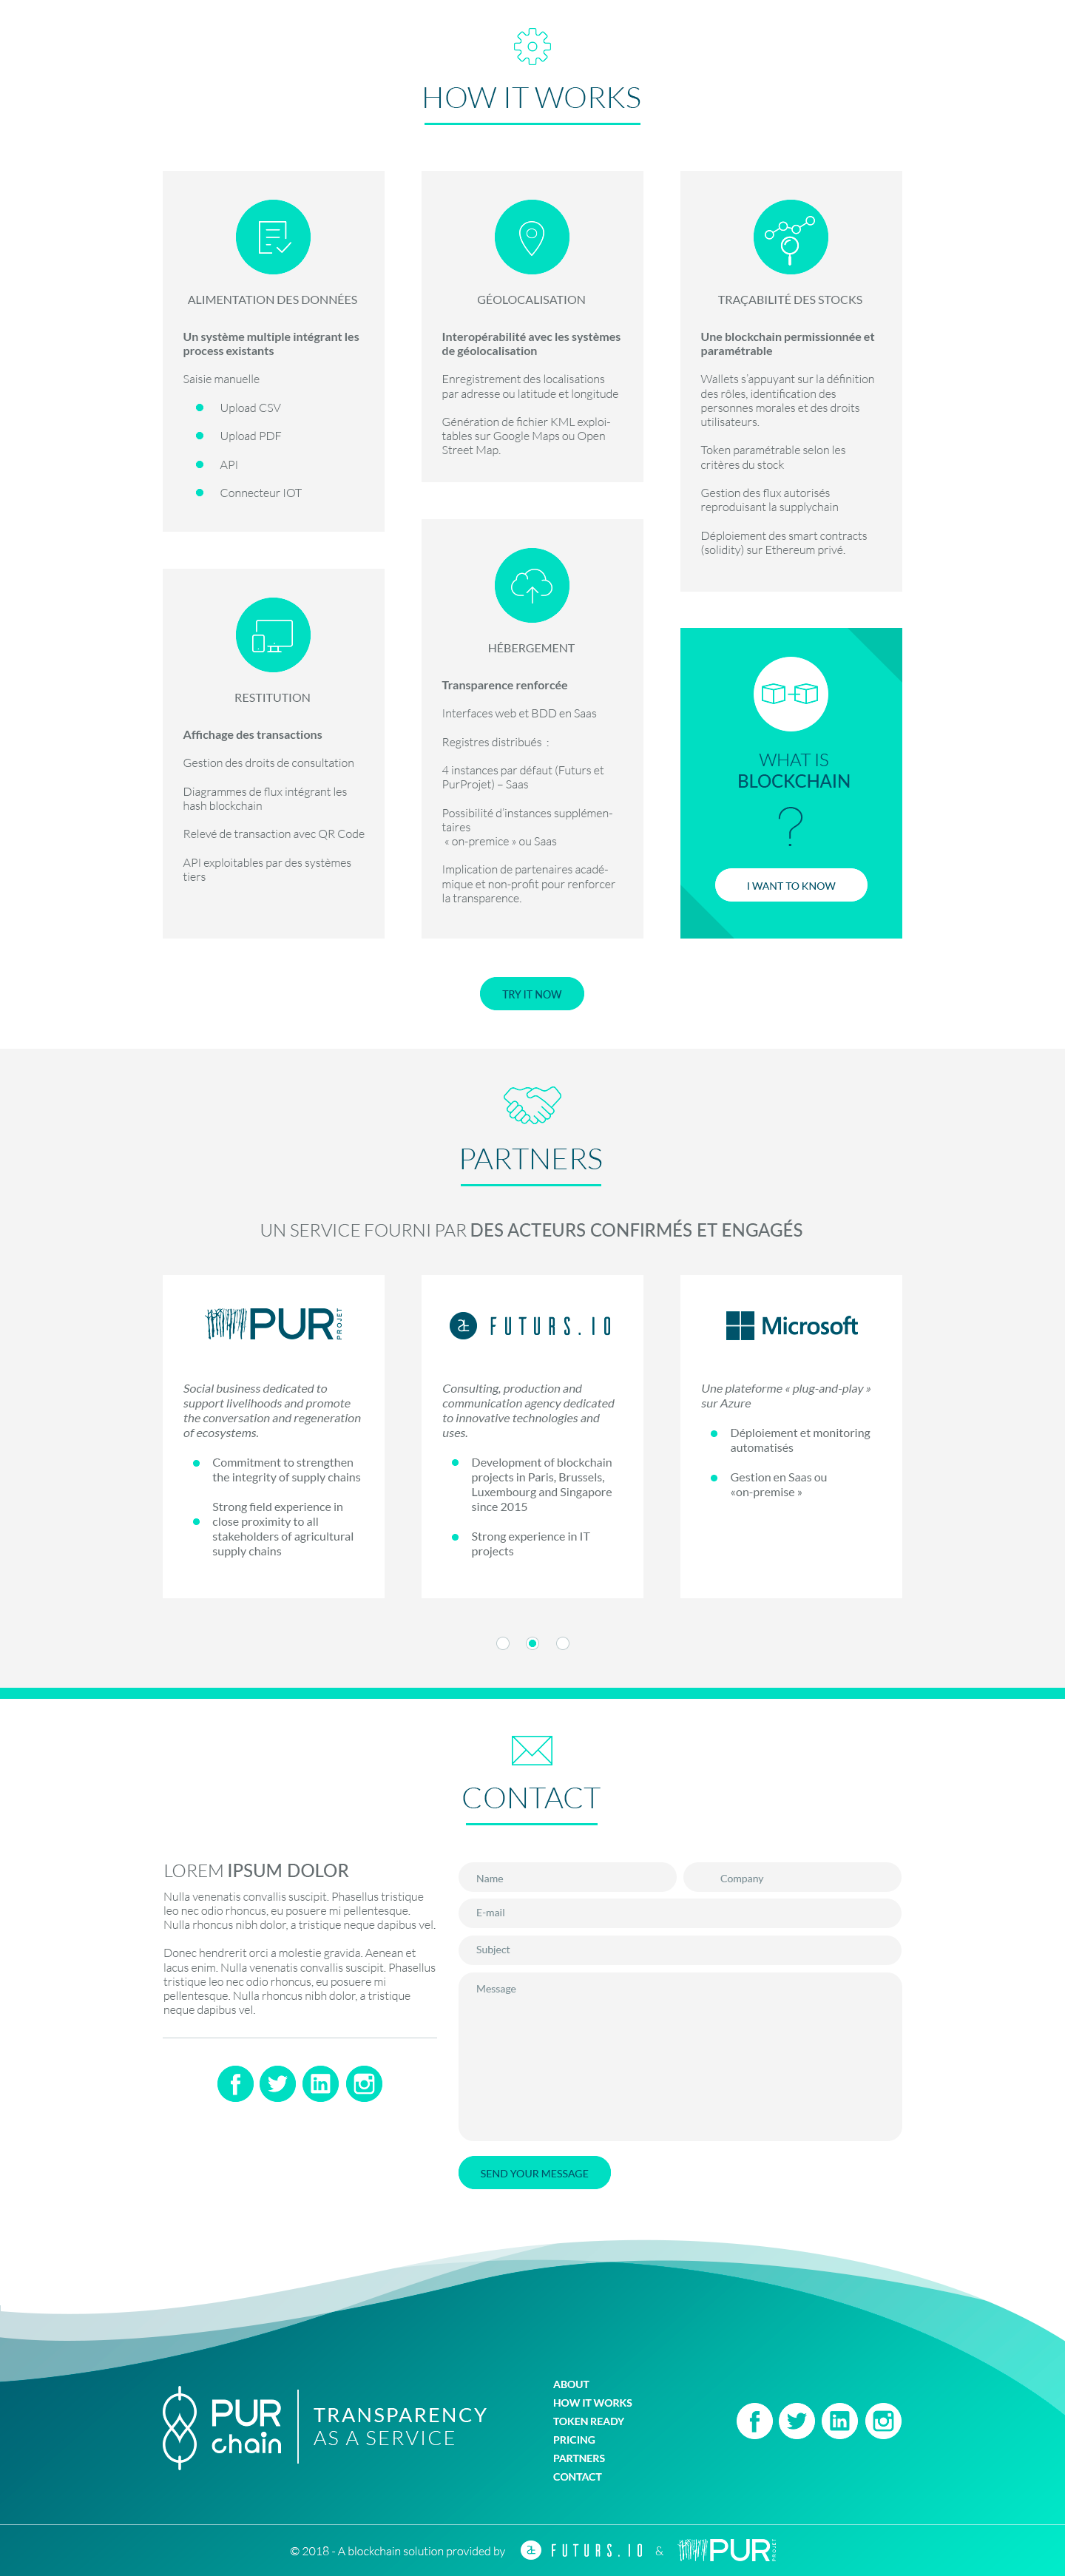 Purchain - Corporate website - Desktop version